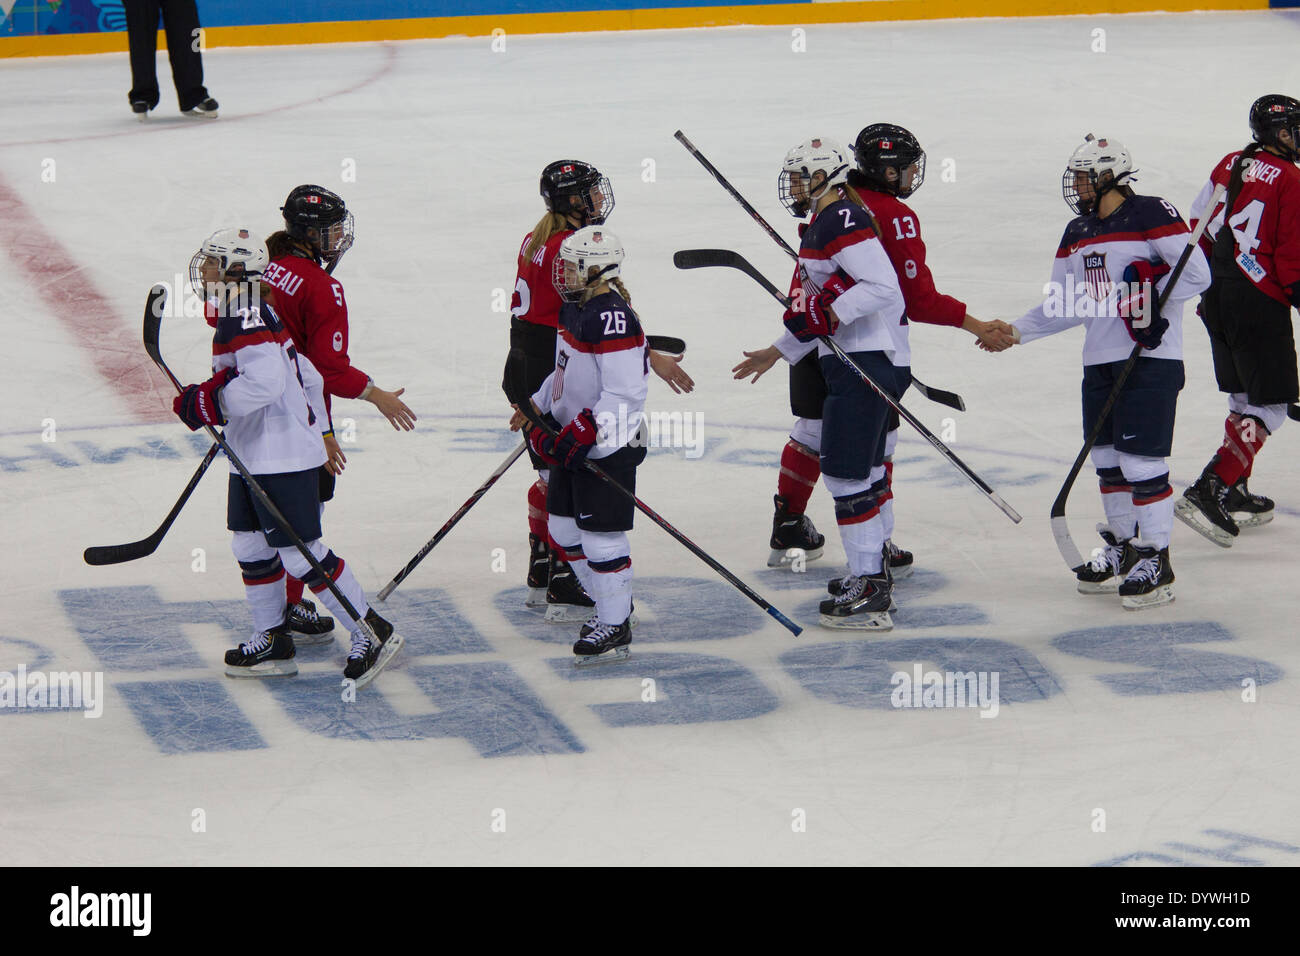 USA-Canada Women's Ice Hockey at the Olympic Winter Games, Sochi 2014 Stock  Photo - Alamy